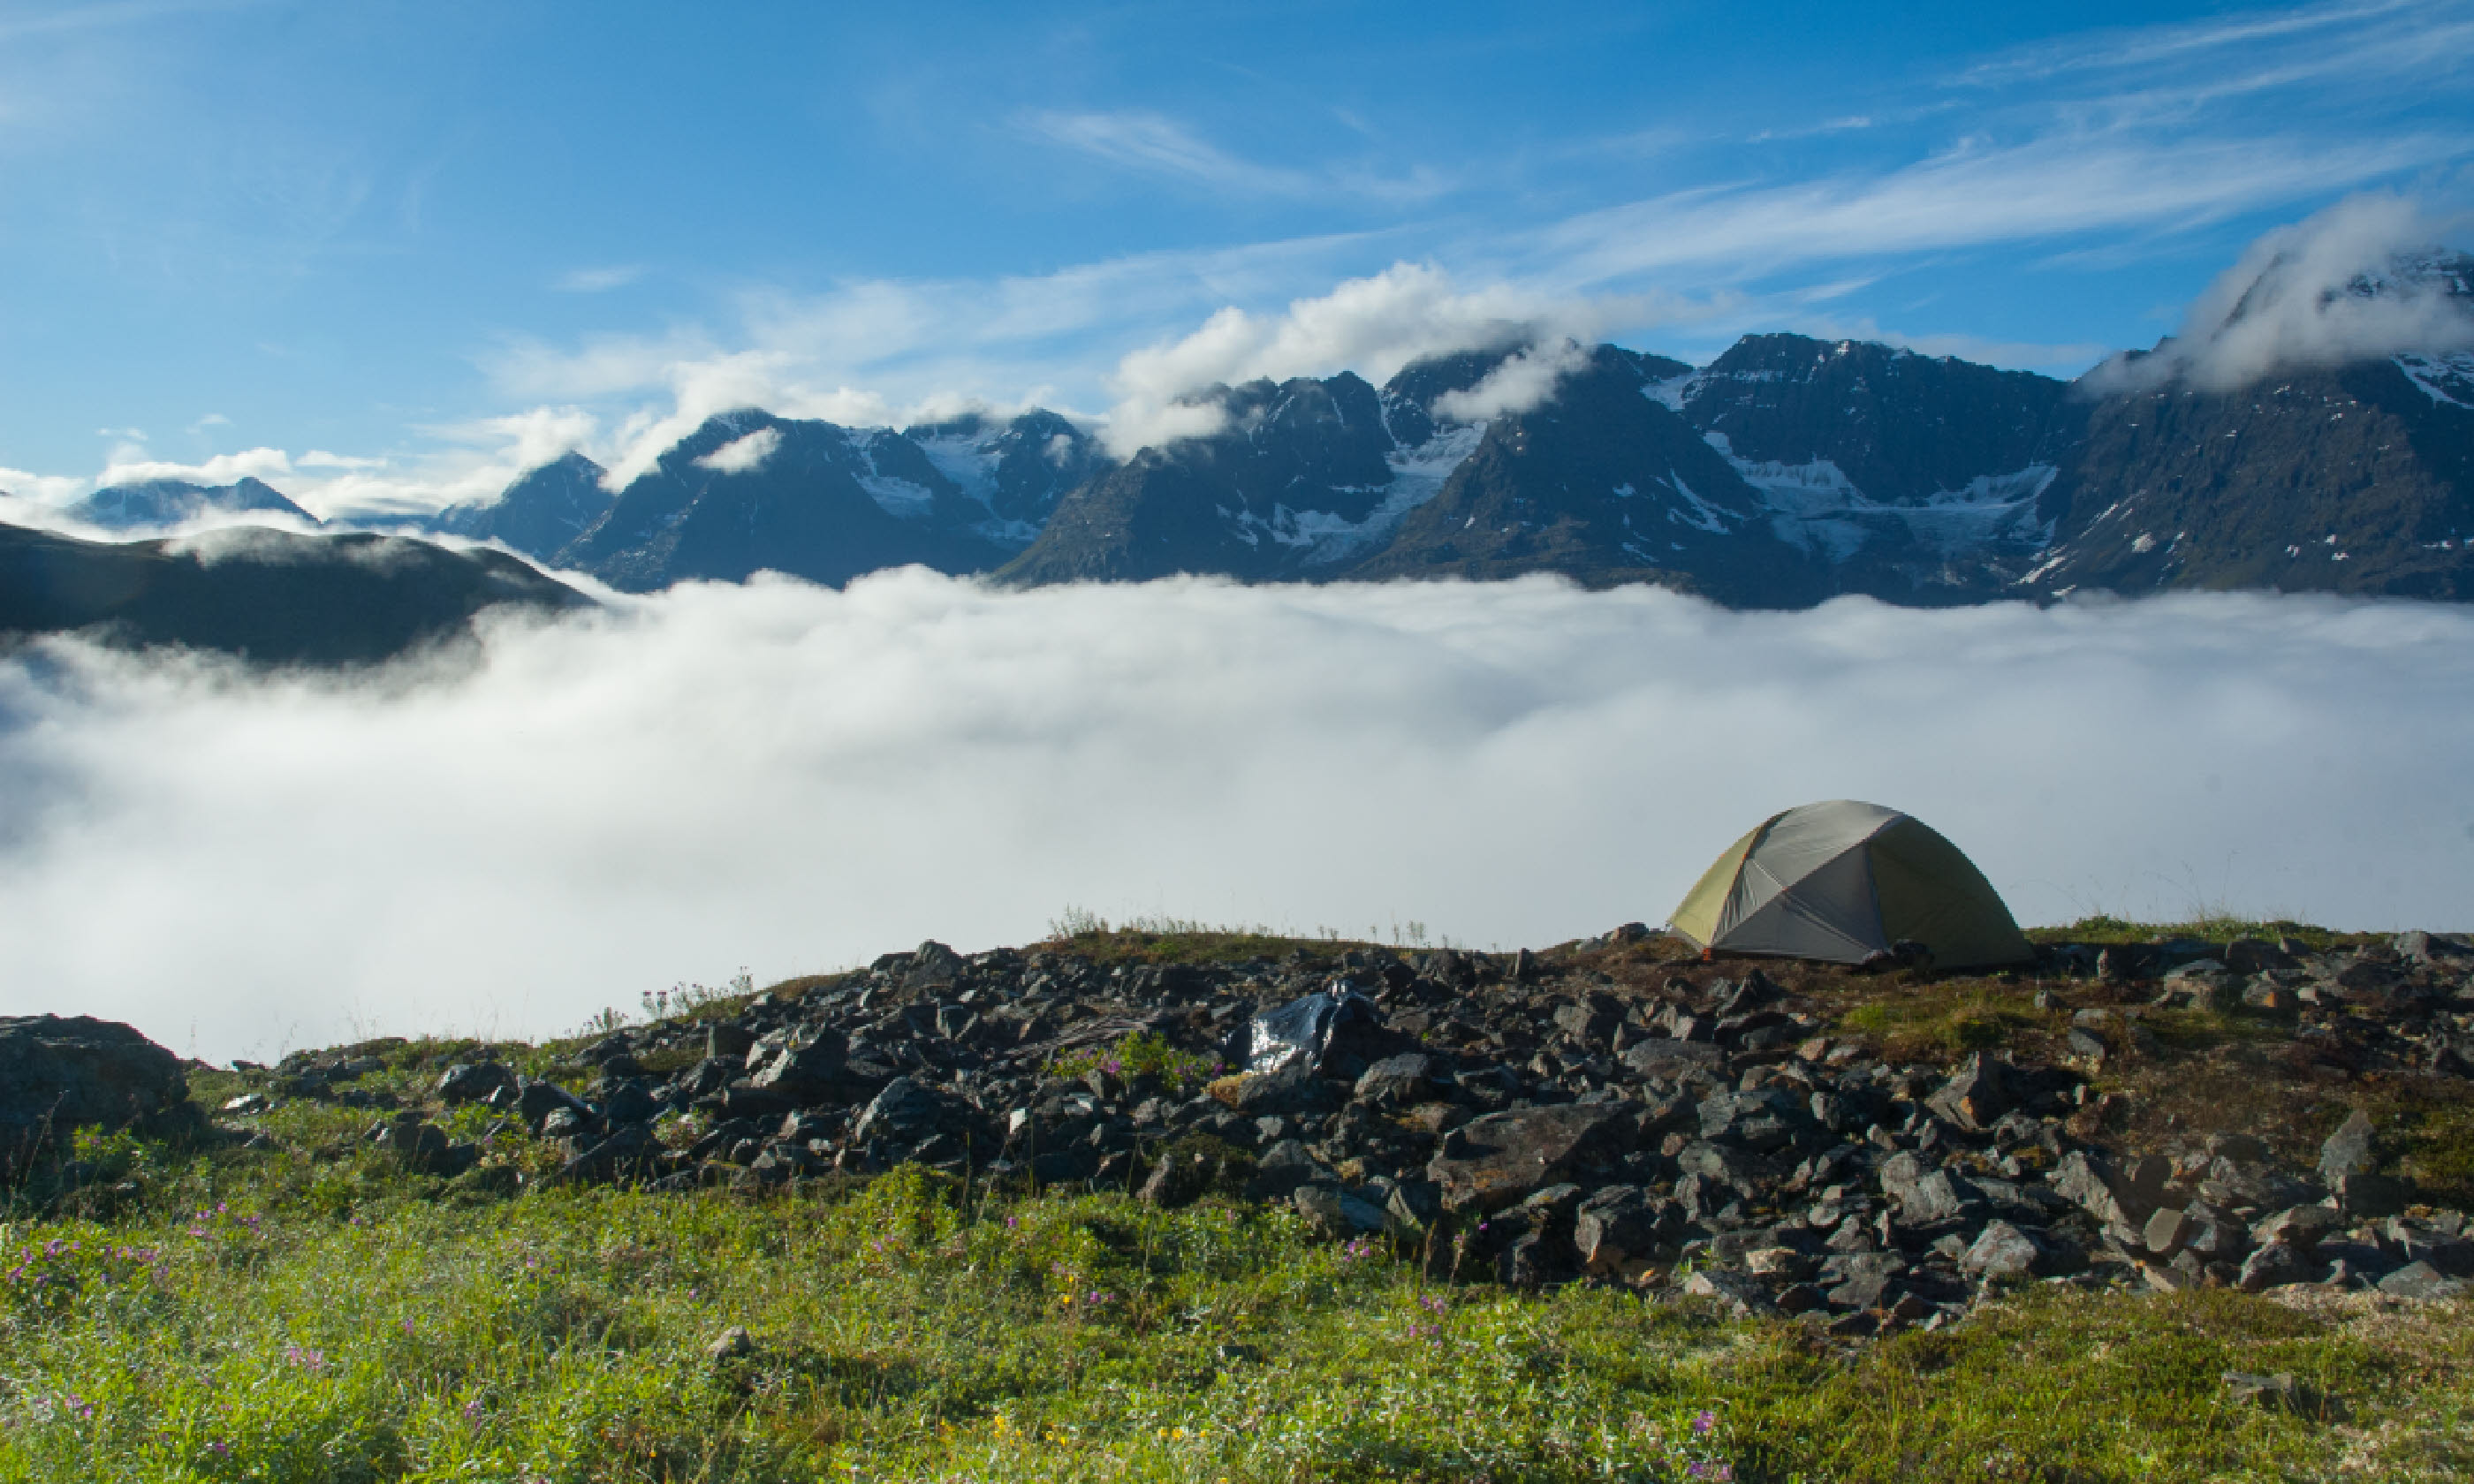 Camping in the Wrangell-St Elias National Park, Alaska (Shutterstock)